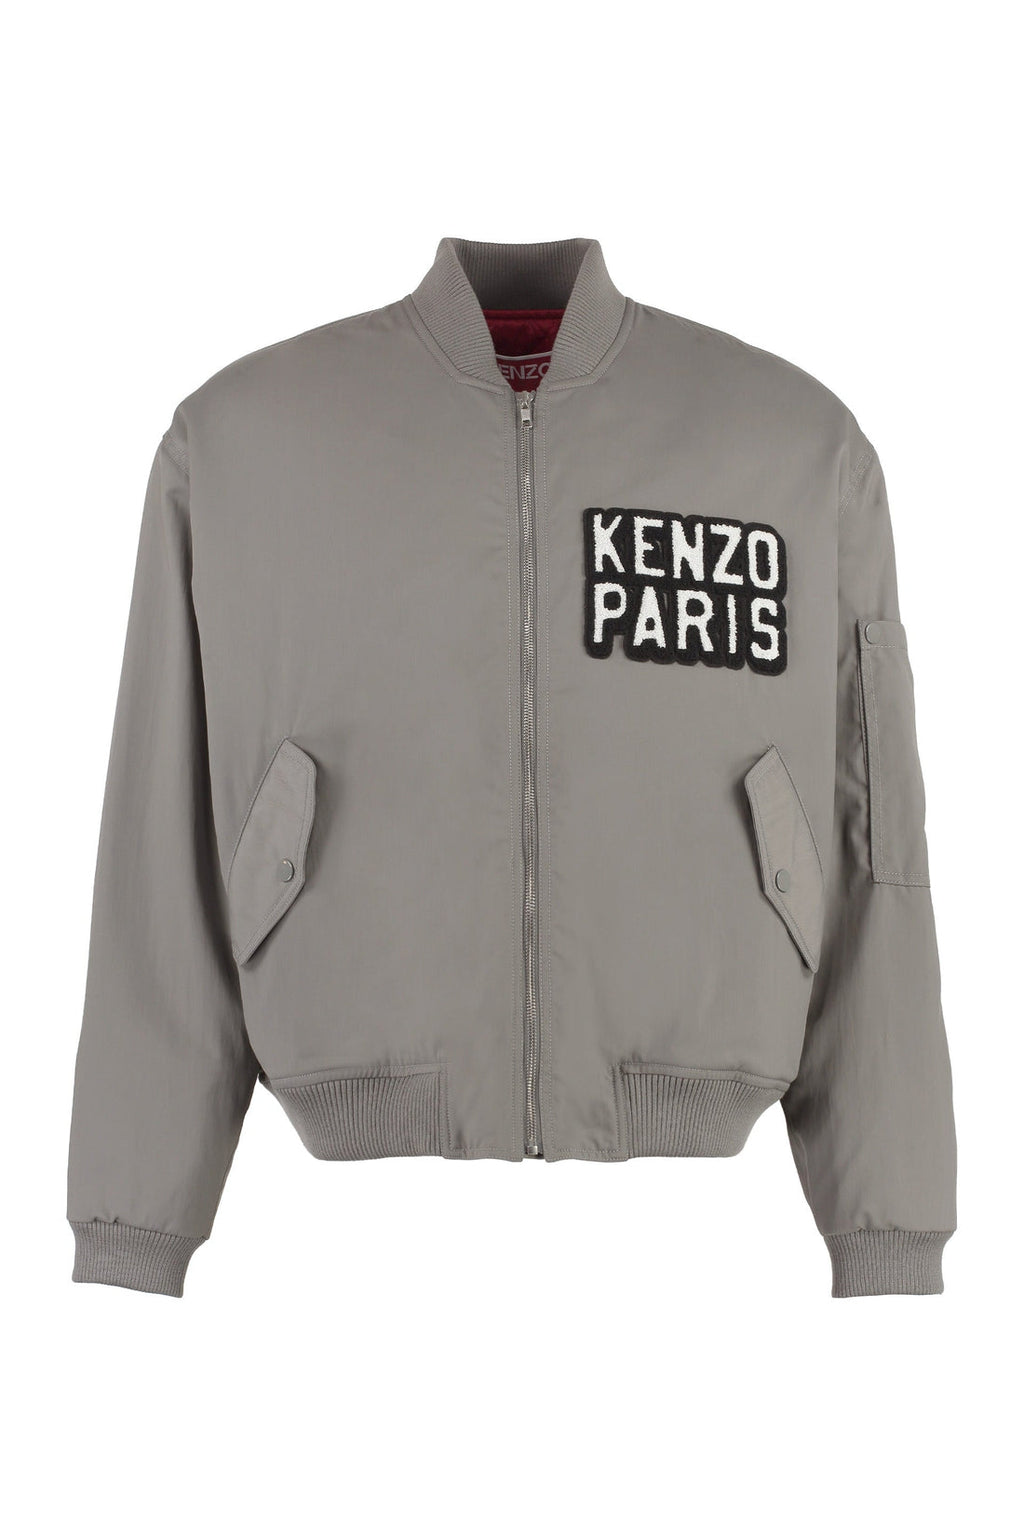 Kenzo-OUTLET-SALE-Patch bomber jacket-ARCHIVIST